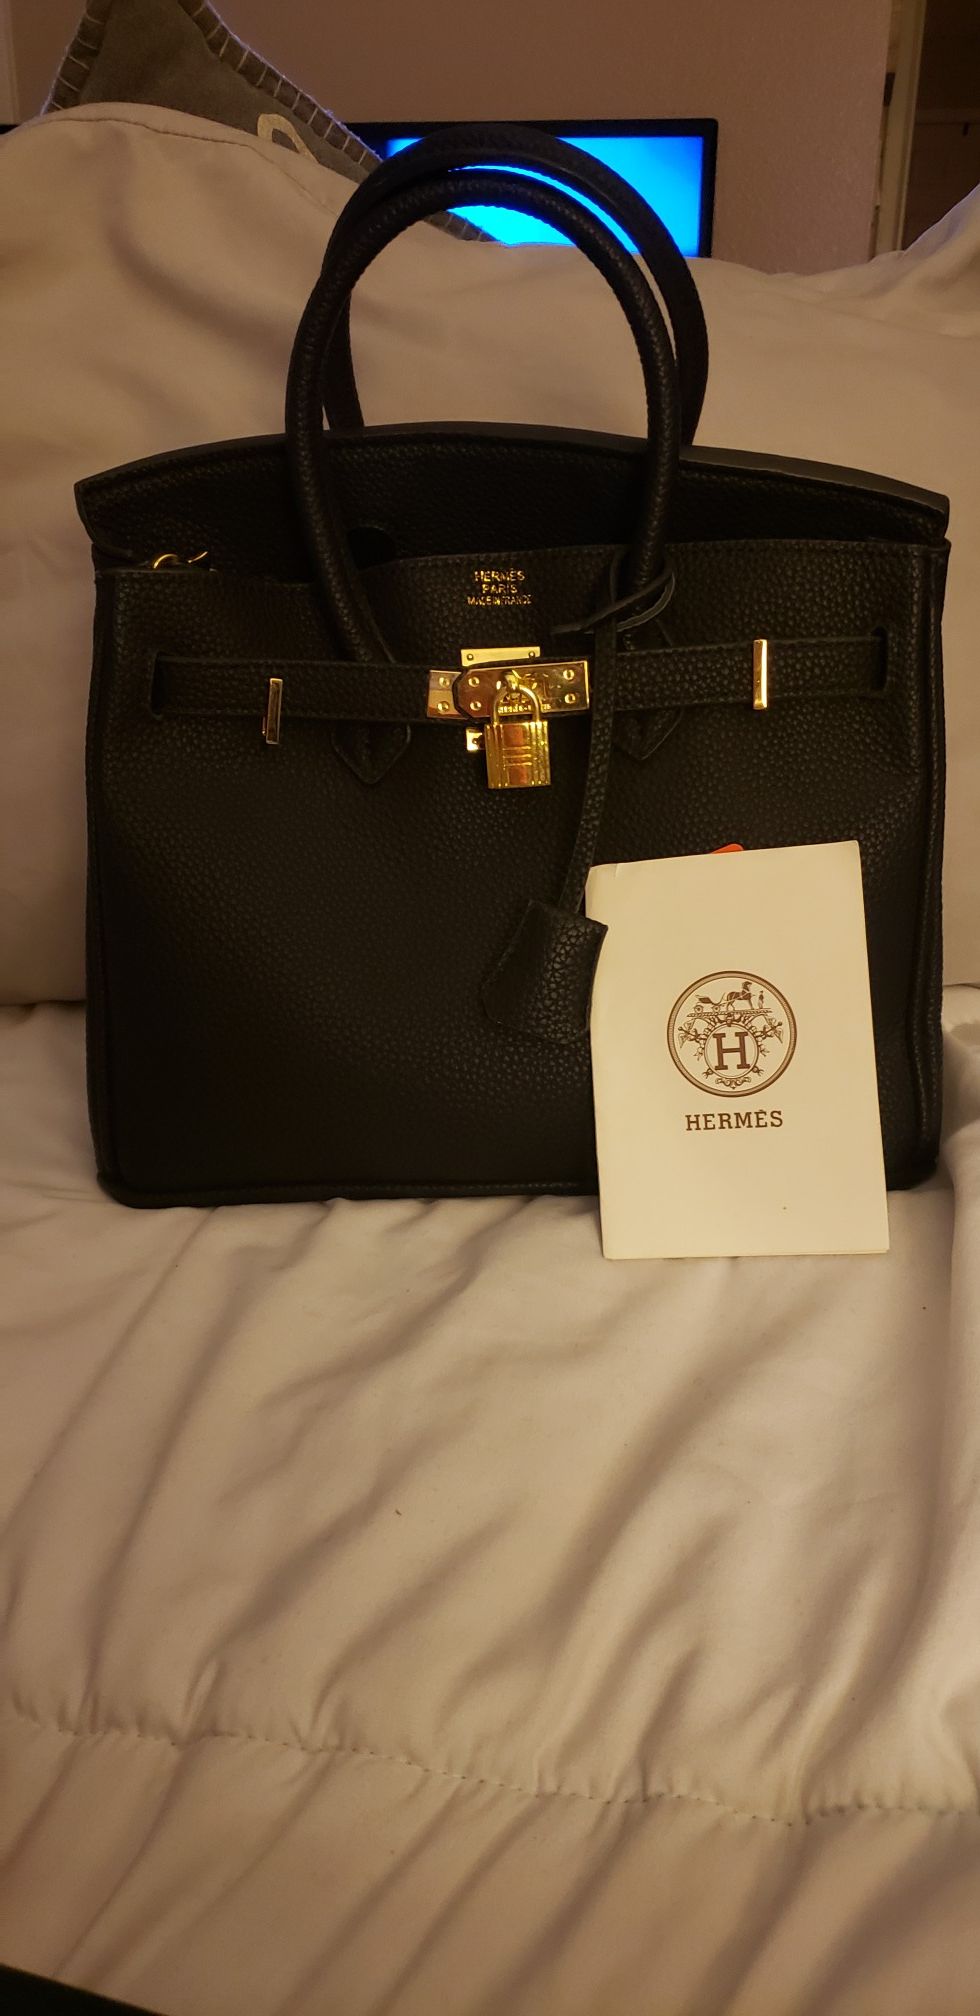 Hermès hand bag